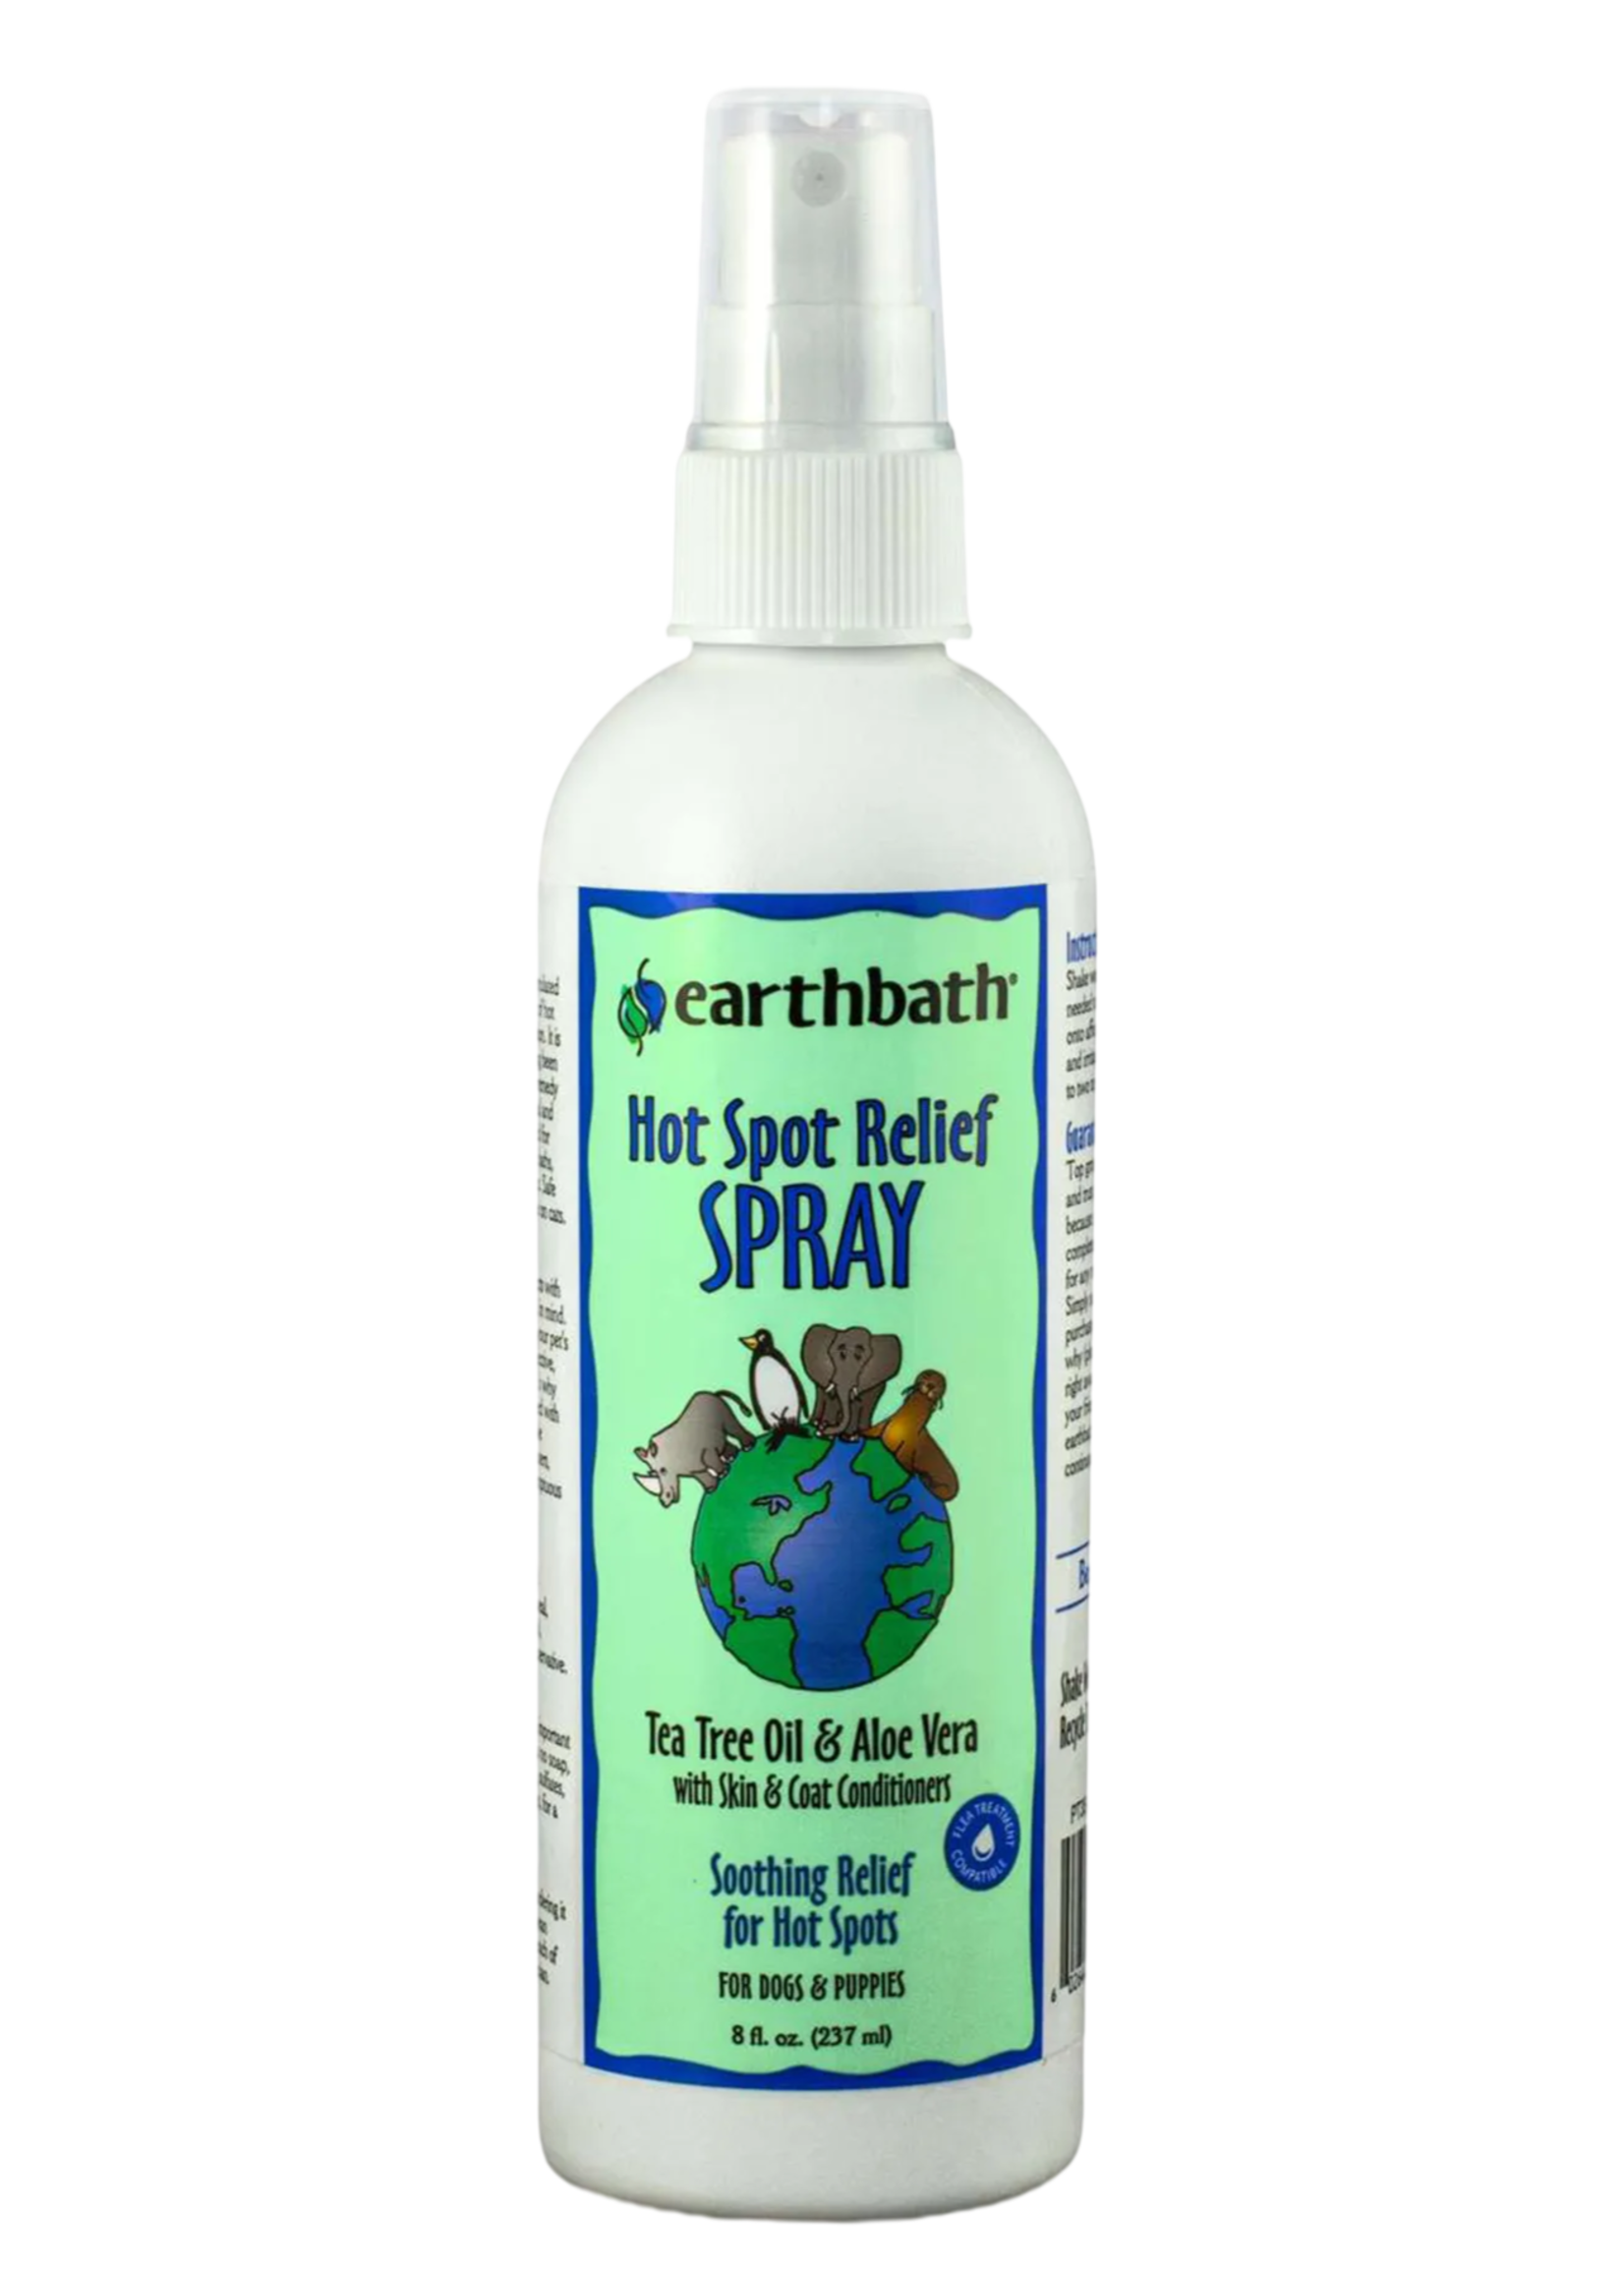 Earthbath Hot Spot Relief Spray